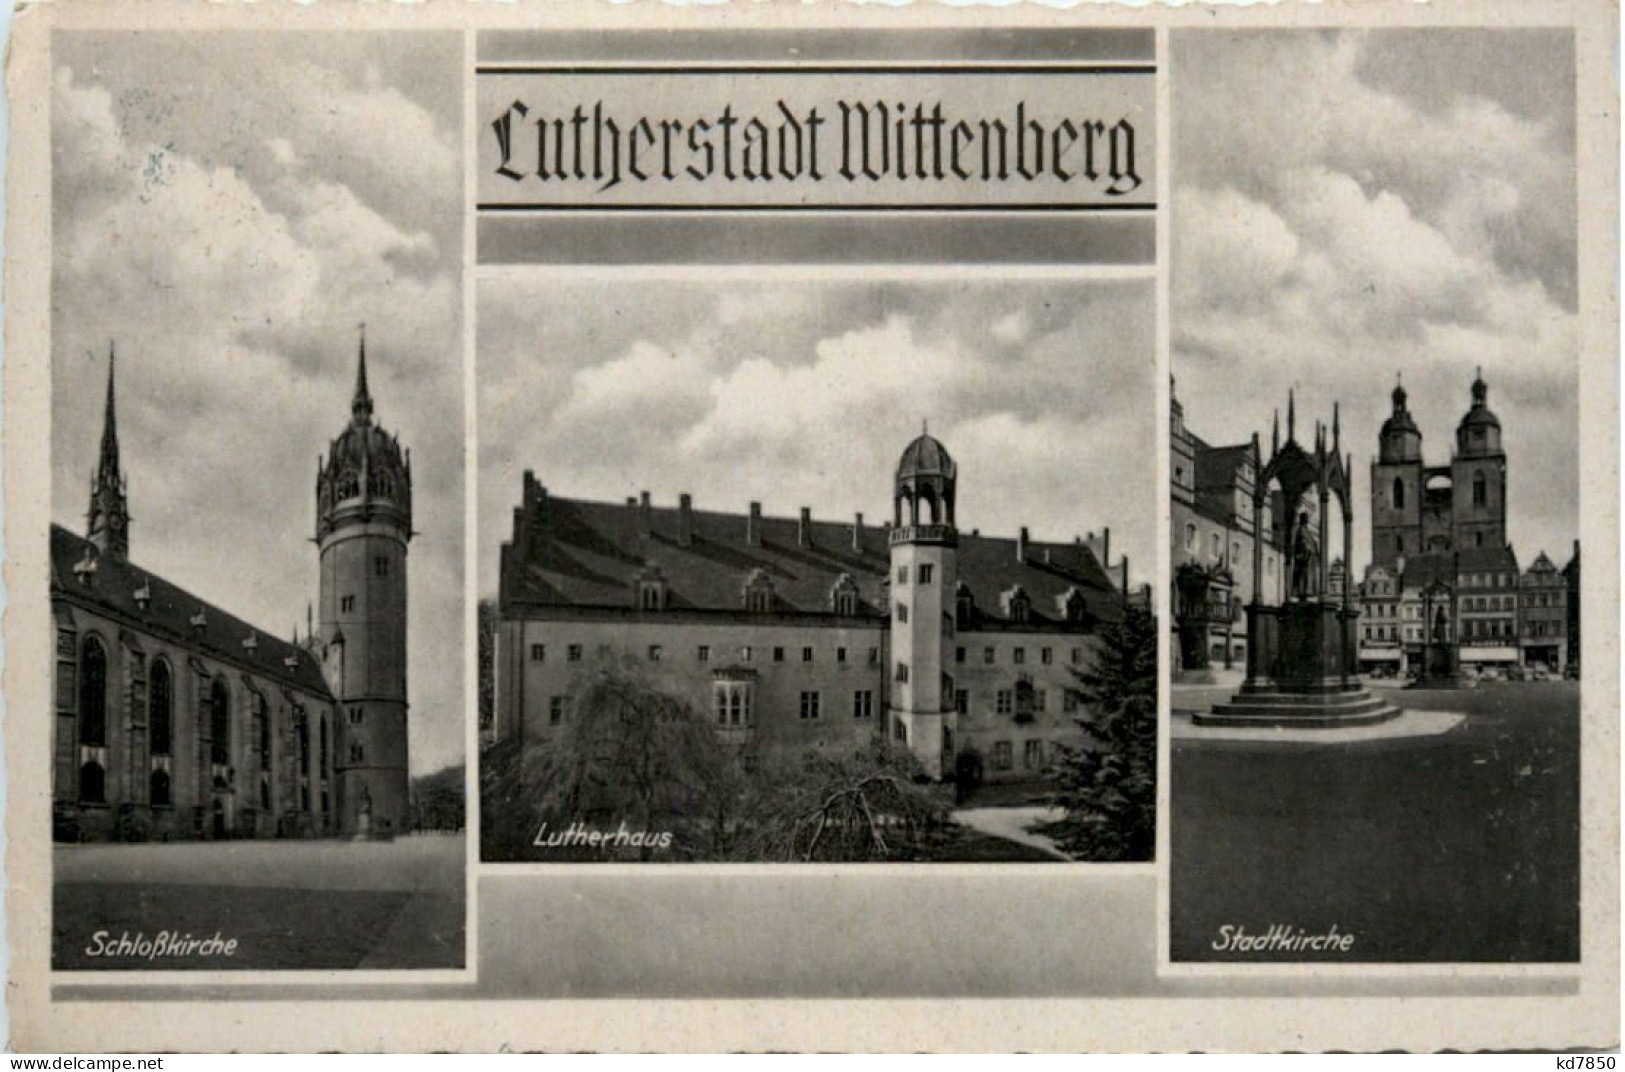 Wittenberg, Div. Bilder - Wittenberg